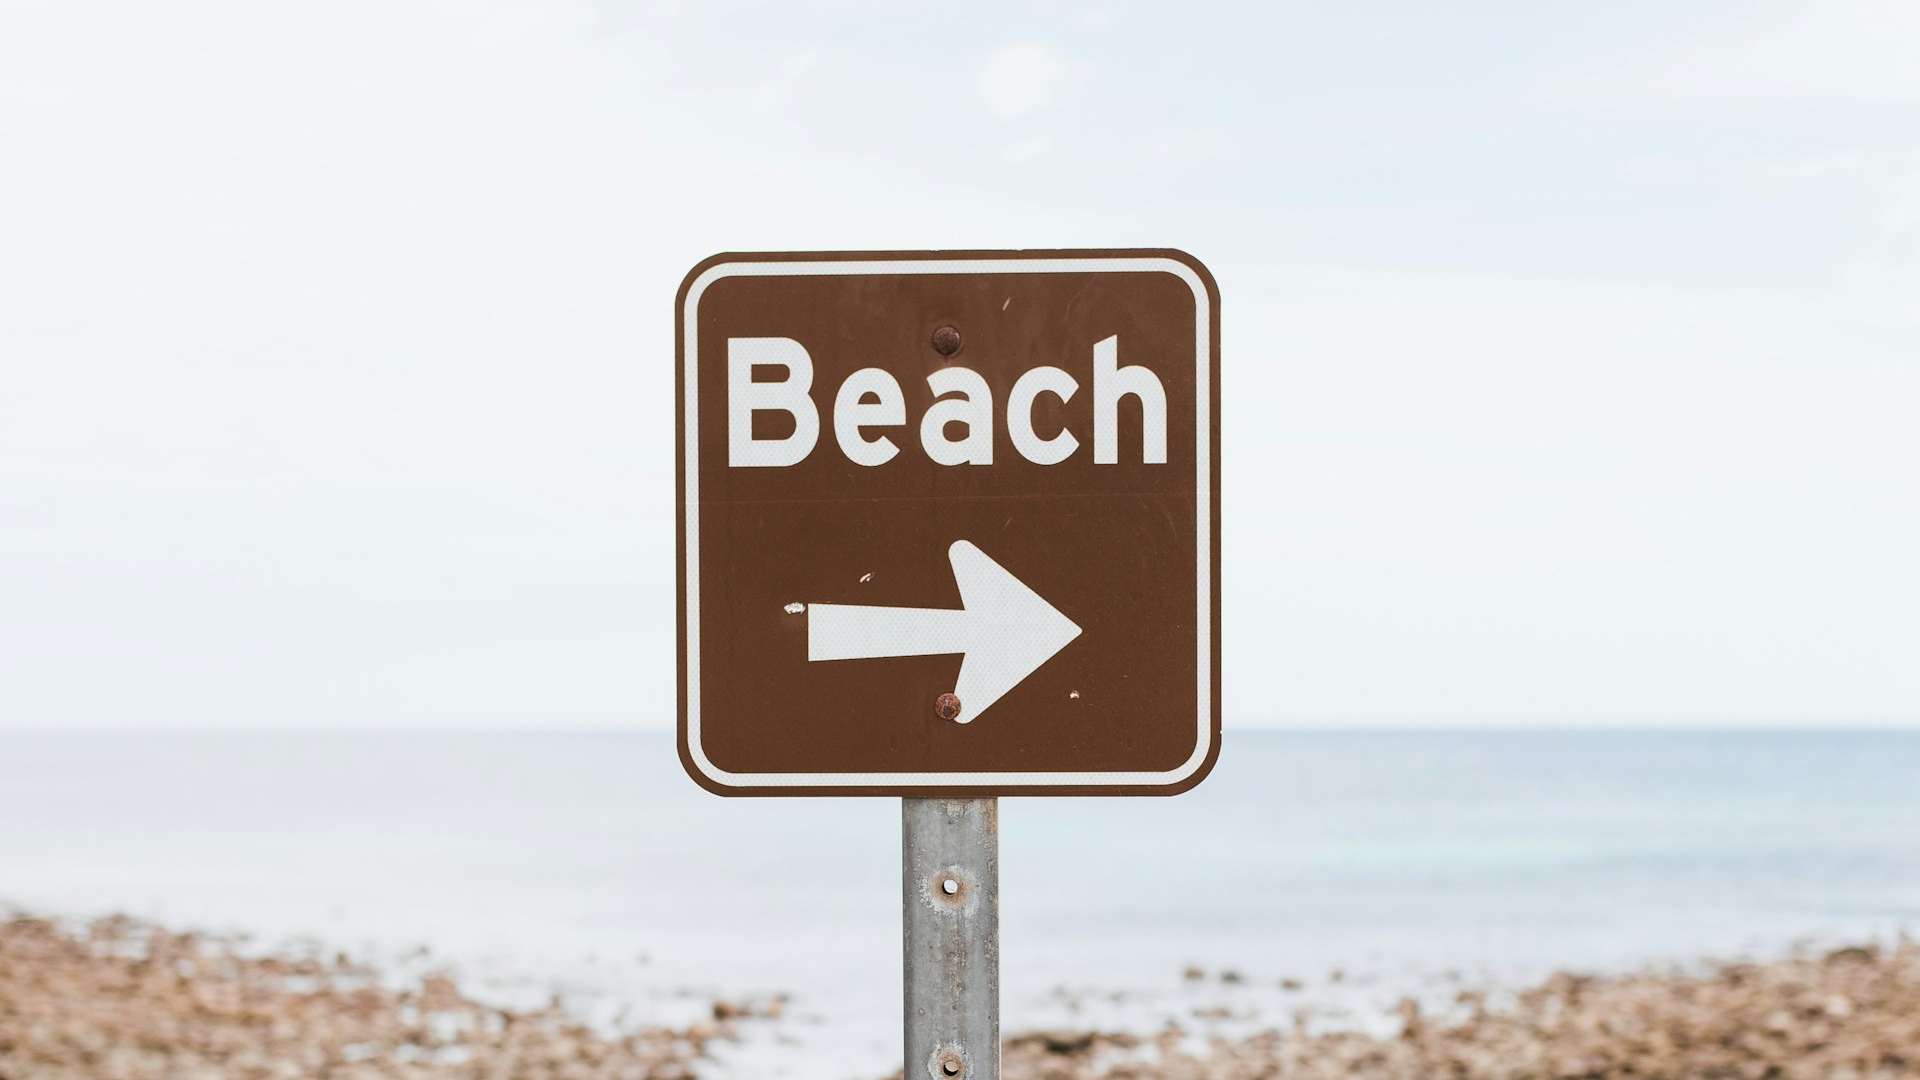 Sign "Beach"